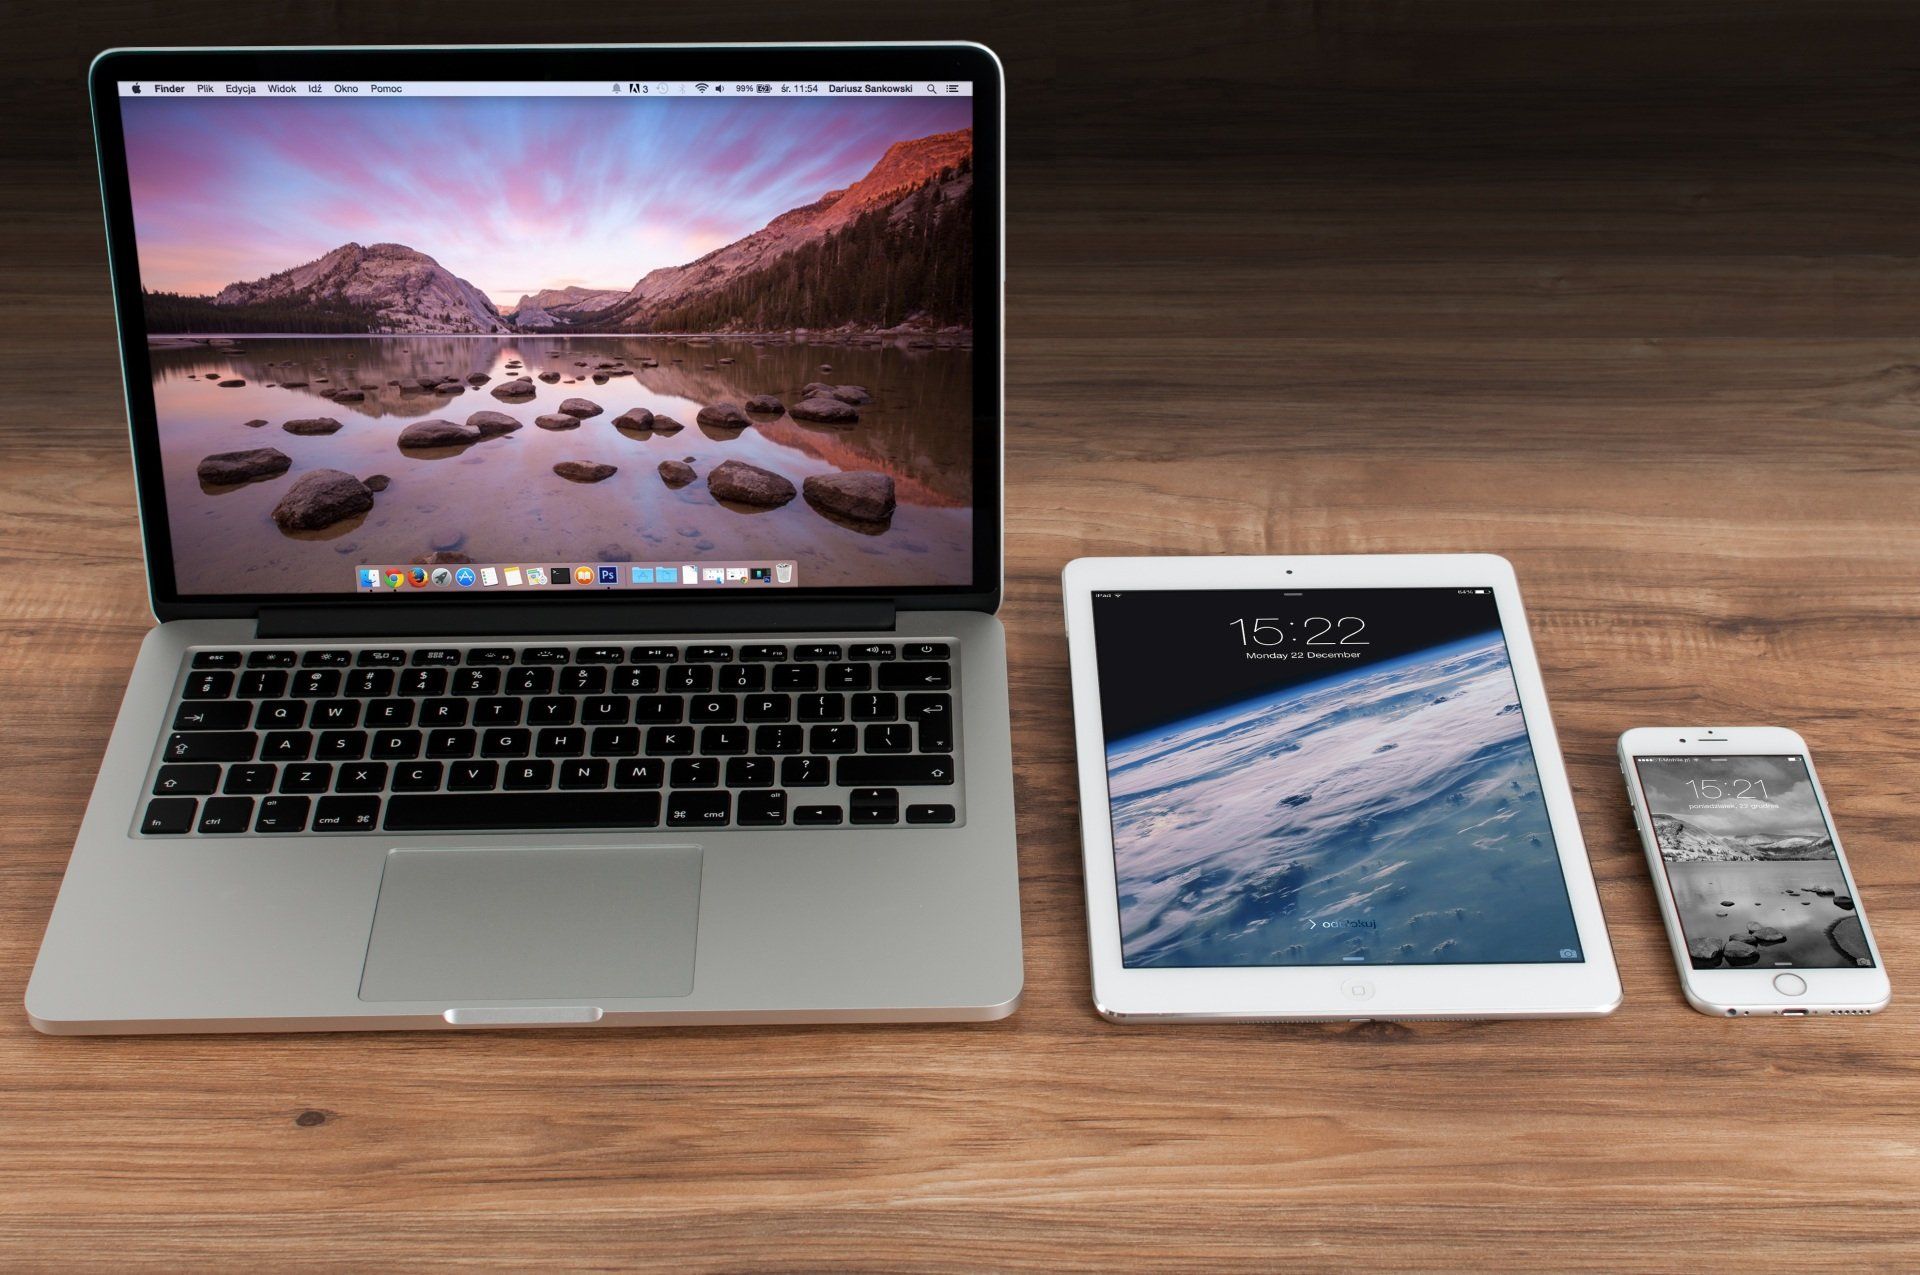 mackbook, ipad, and iphone